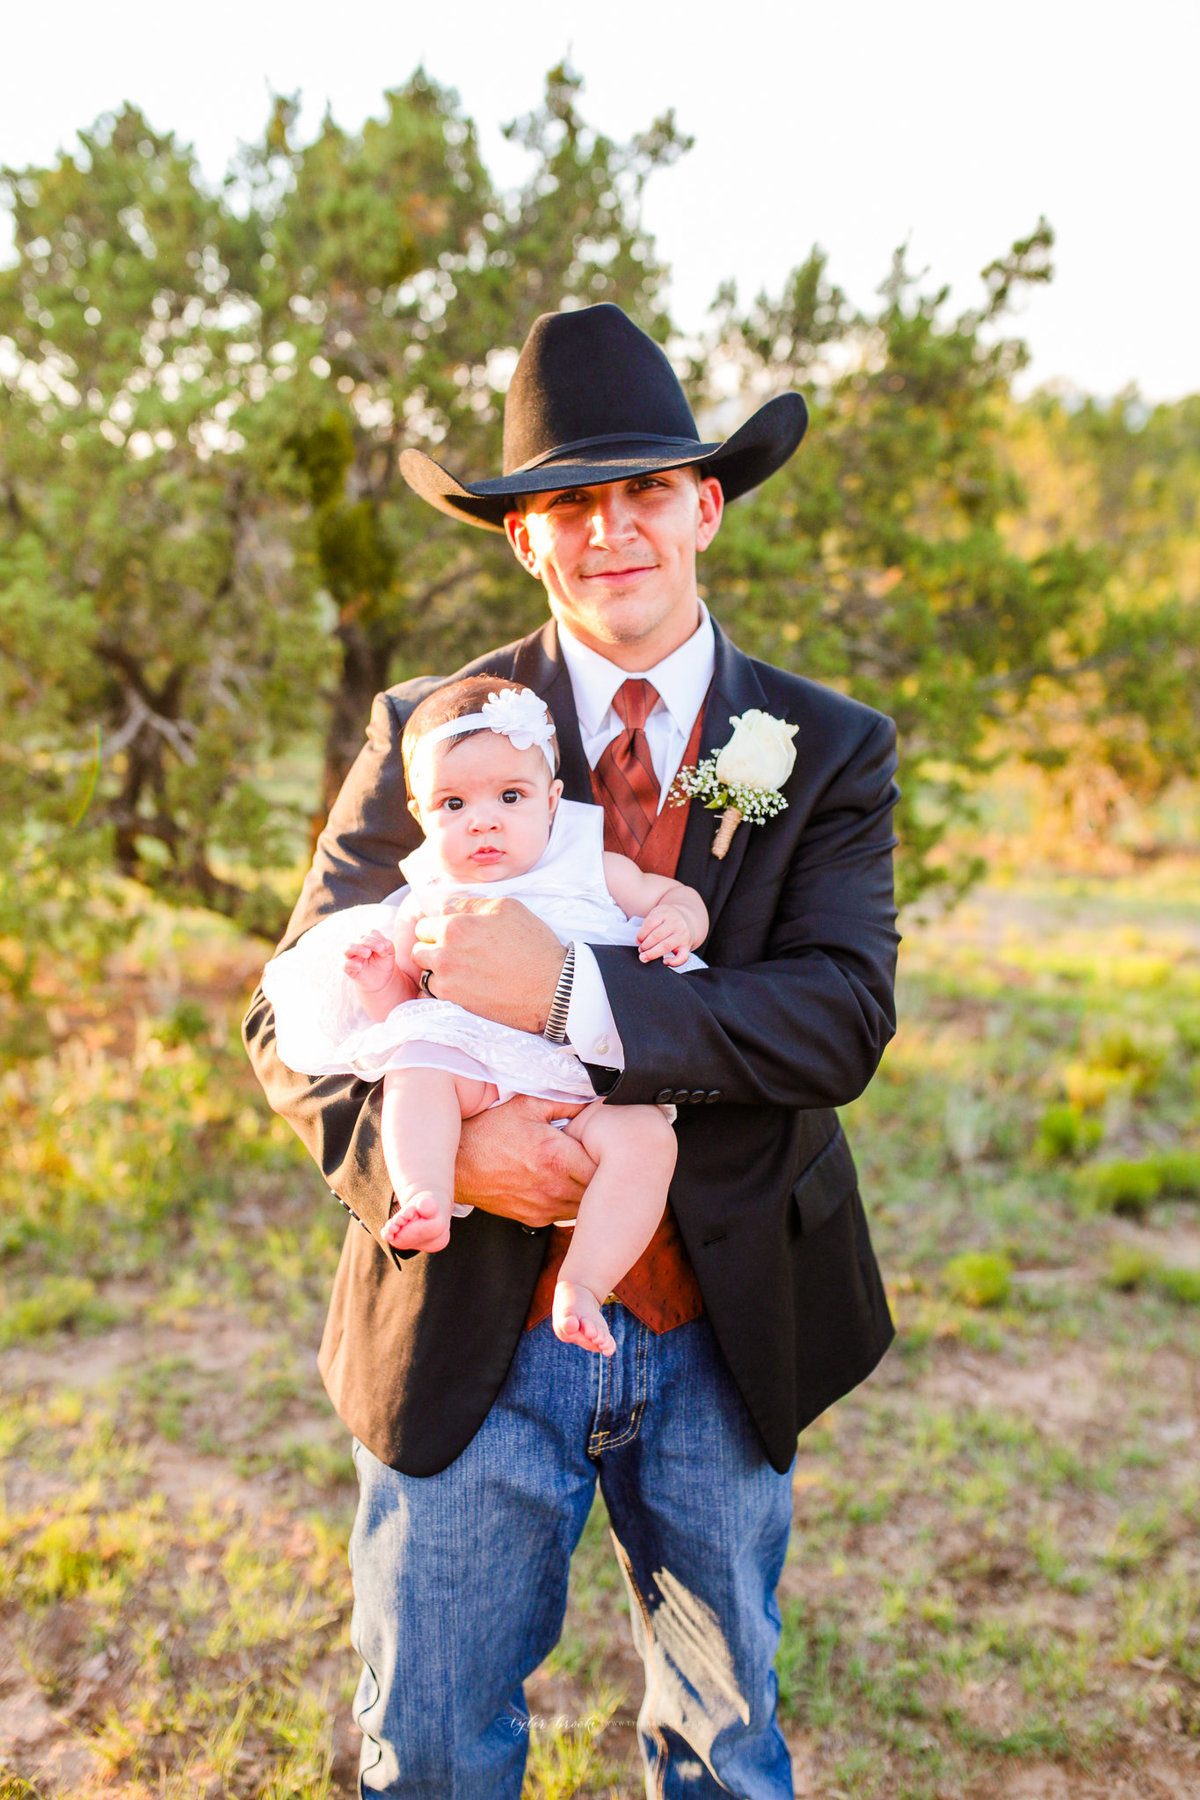 Edgewood-New-Mexico_Country-Wedding-Photographer_www.tylerbrooke.com_Kate-Kauffman-32-of-35